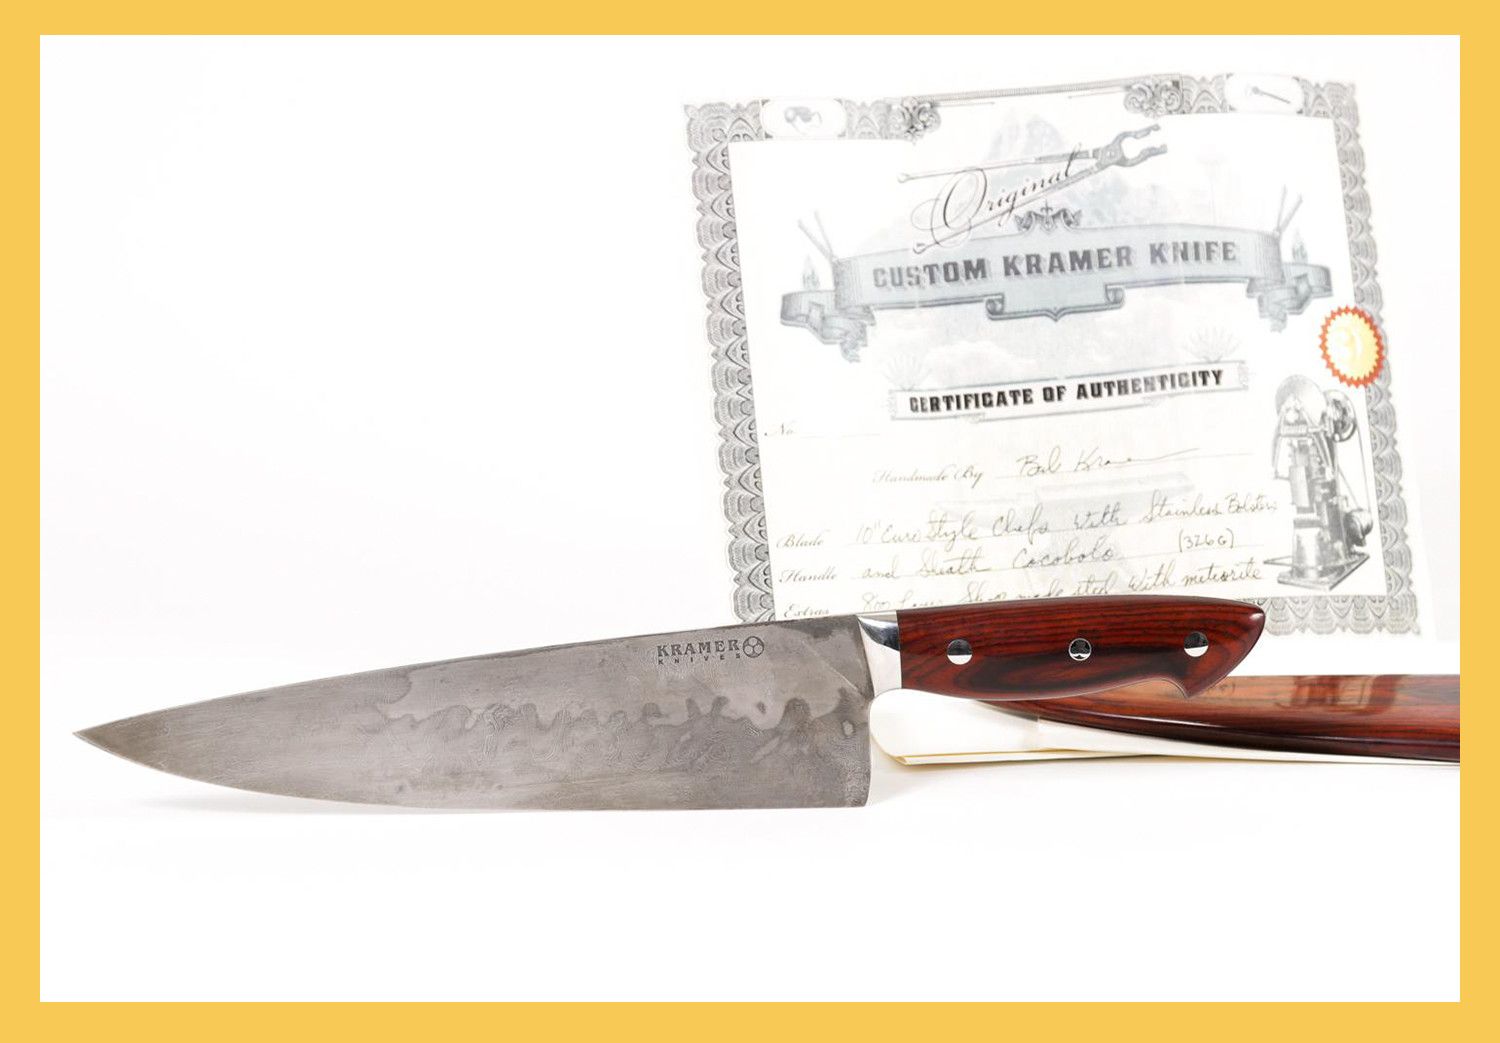 Anthony Bourdain Auction Items Includes Bob Kramer Knife - Eric Ripert, Jose Andres on Bourdain